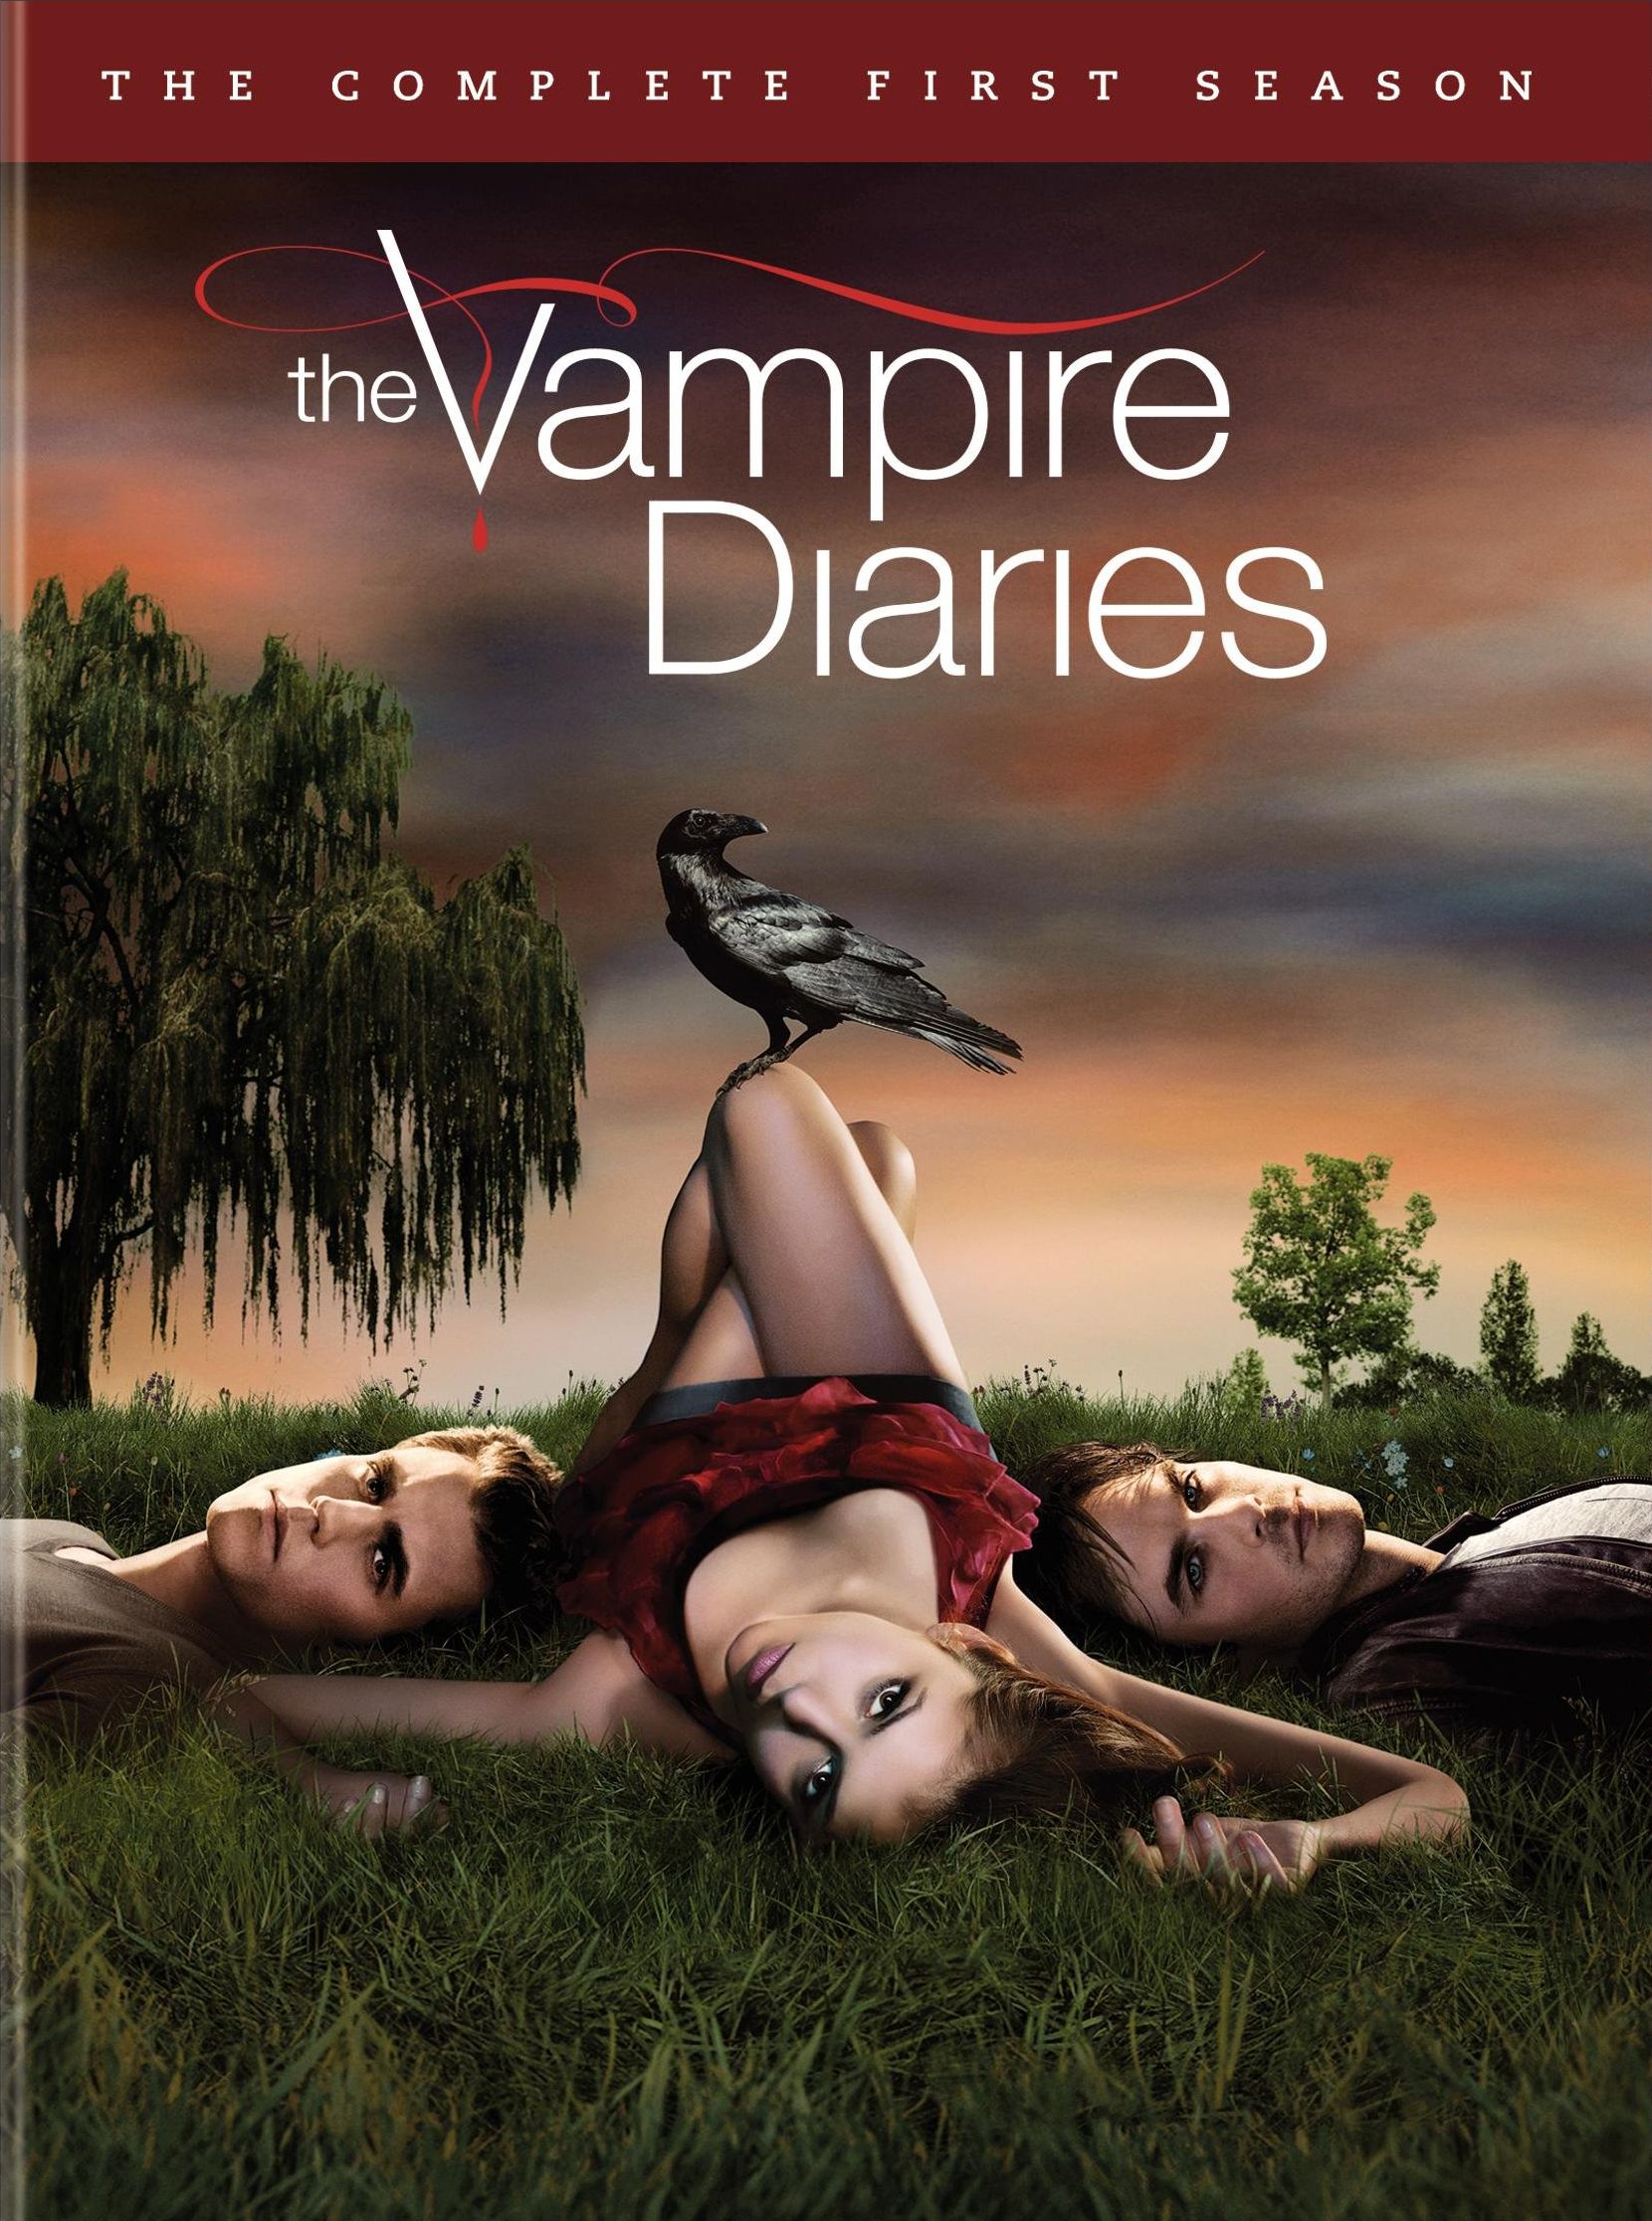 the vampire diaries vámpírnaplók season 1 évad dvd borító cover.jpg